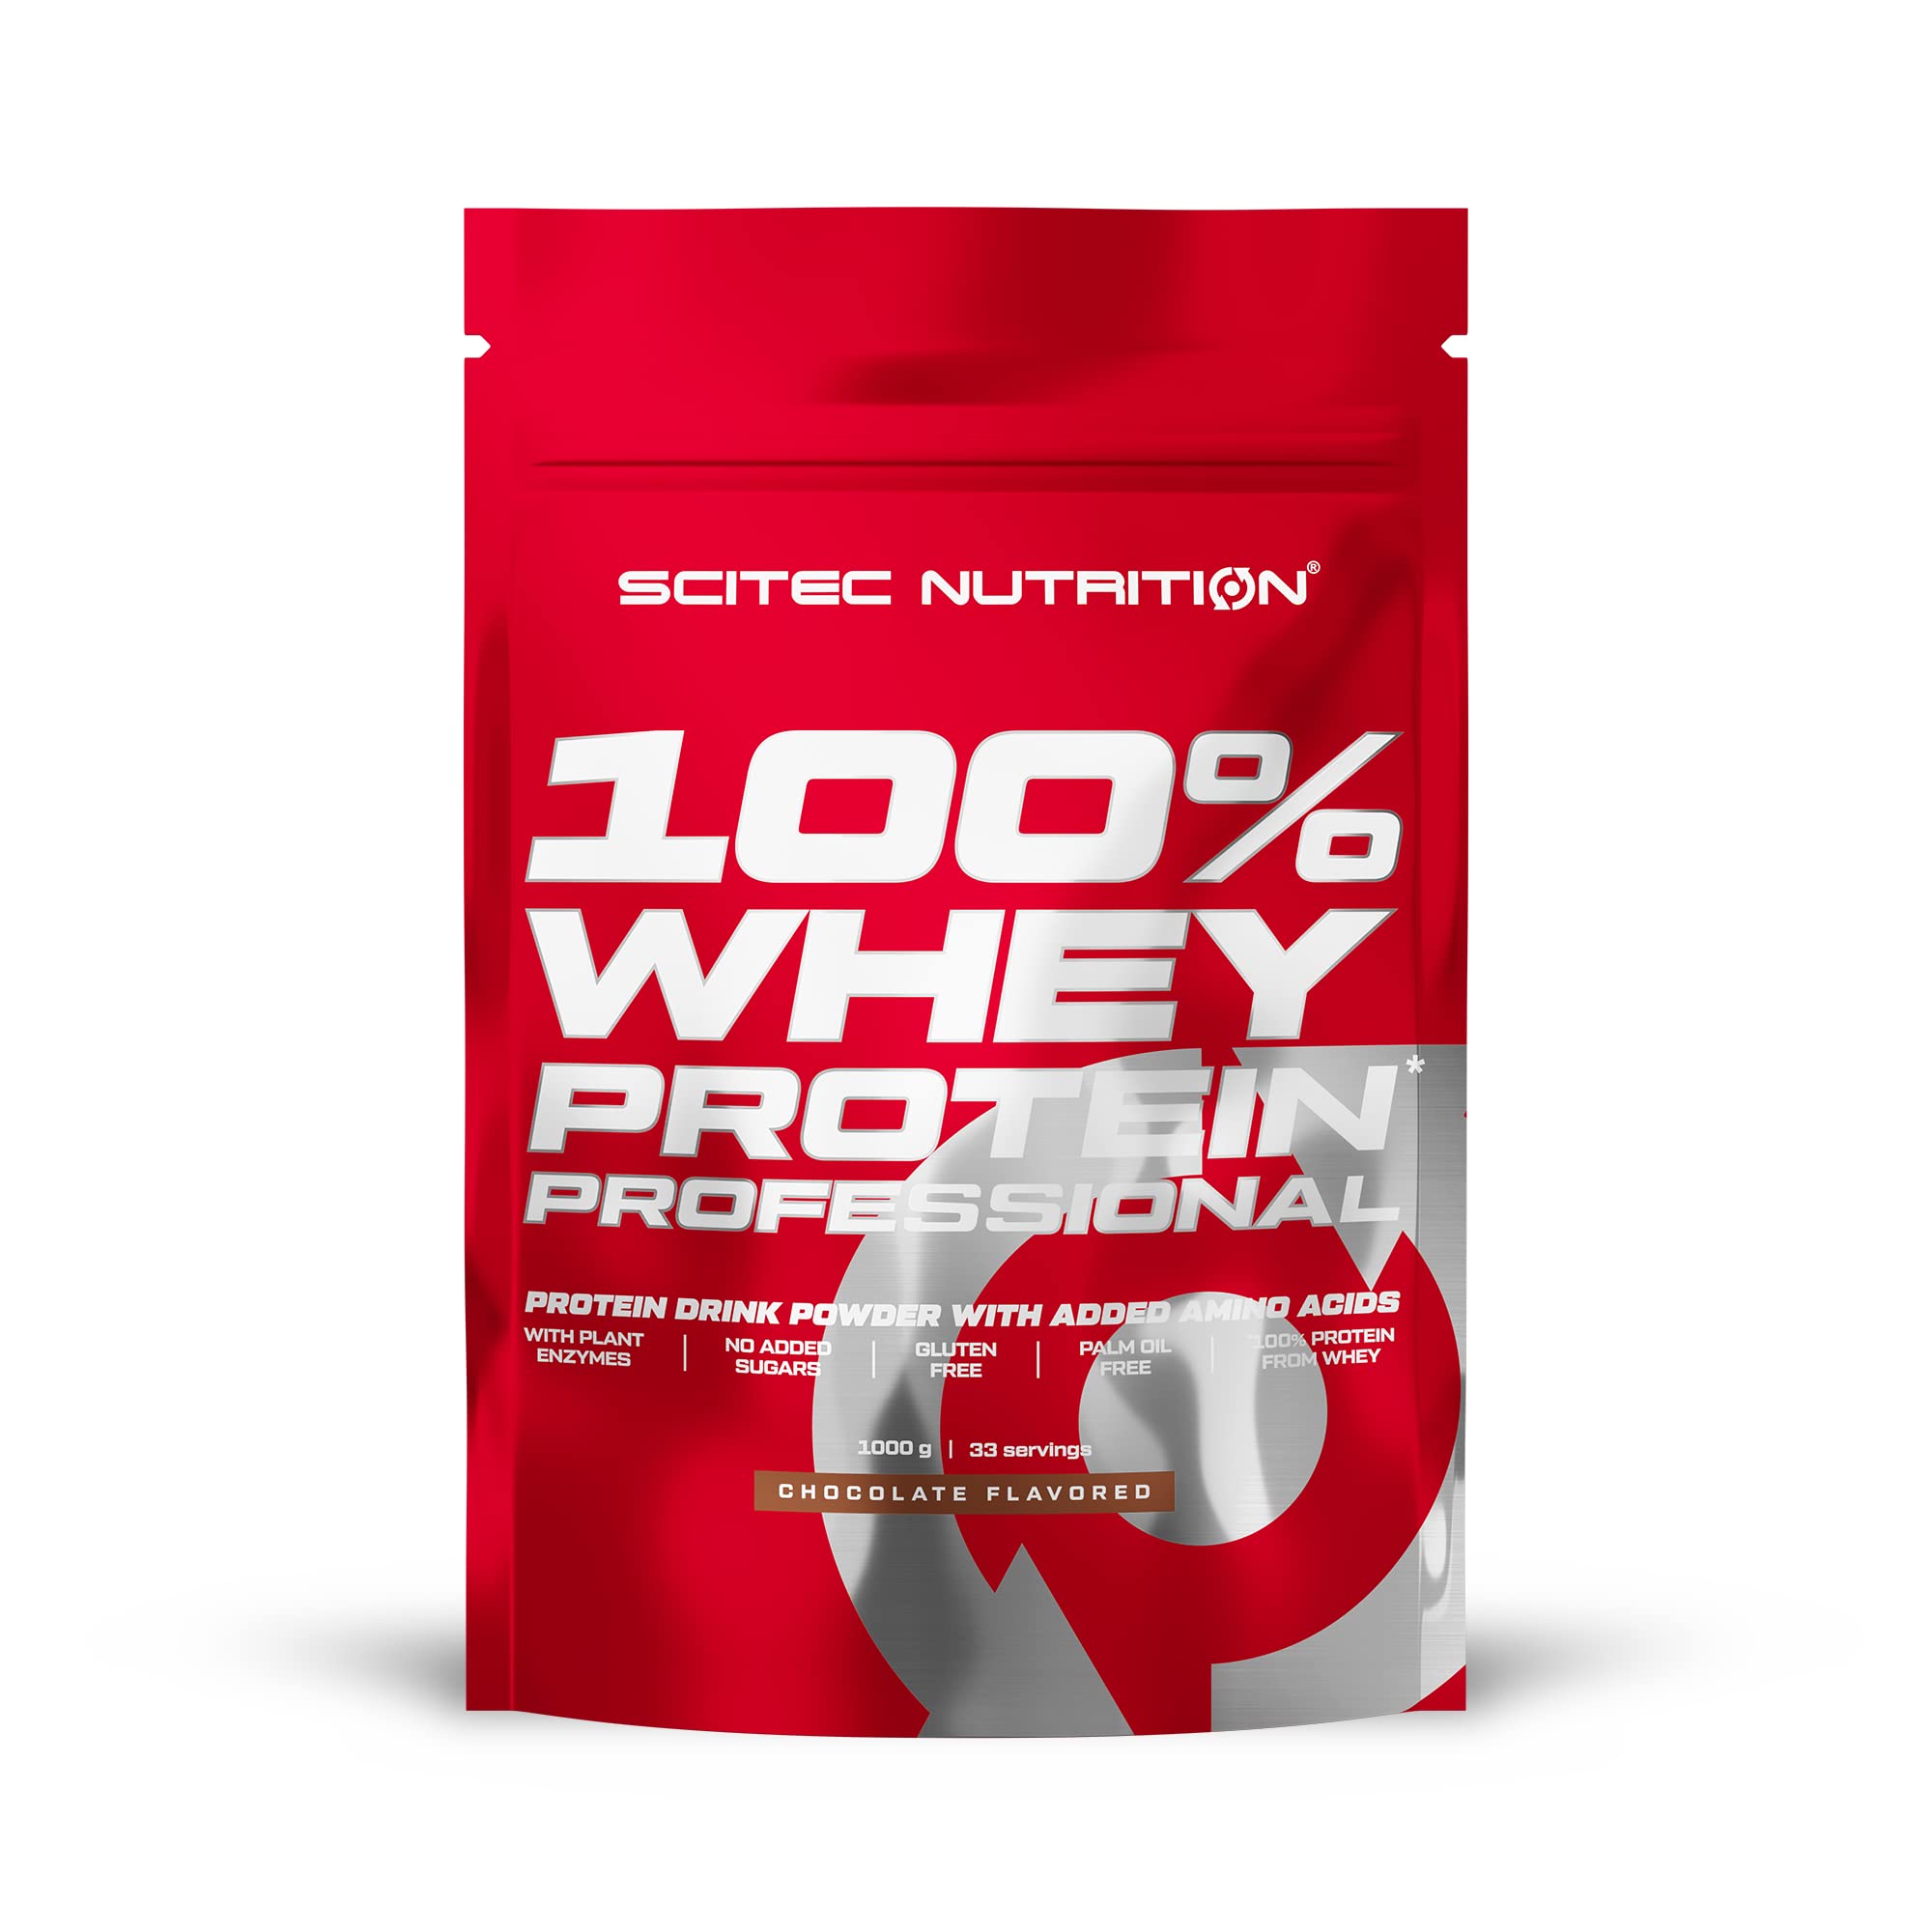 Photos - Protein Scitec Nutrition SciTec 100 Whey  Professional 1kg, Chocolate Hazelnut - 920g PBW-P4 